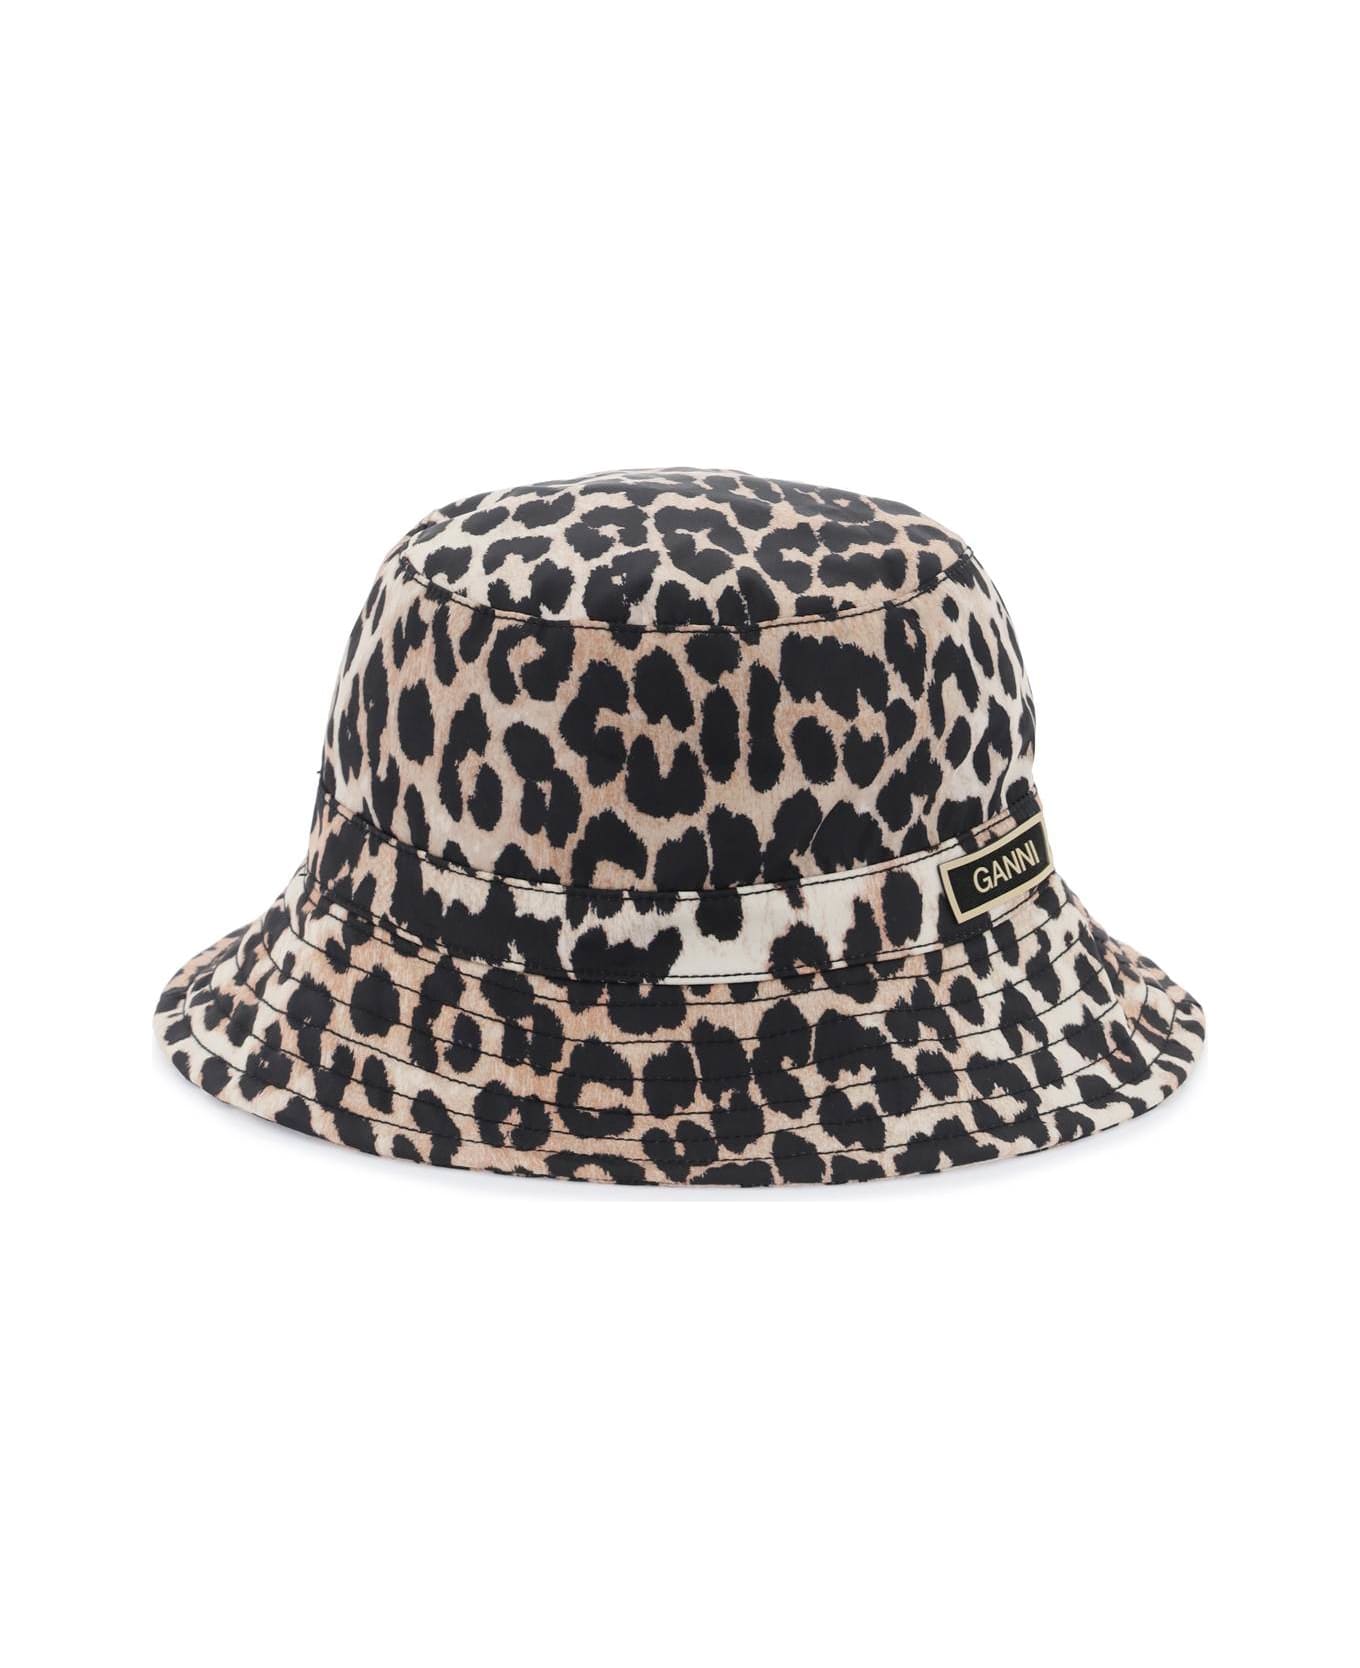 Ganni Animal Print Bucket Hat - LEOPARD 帽子